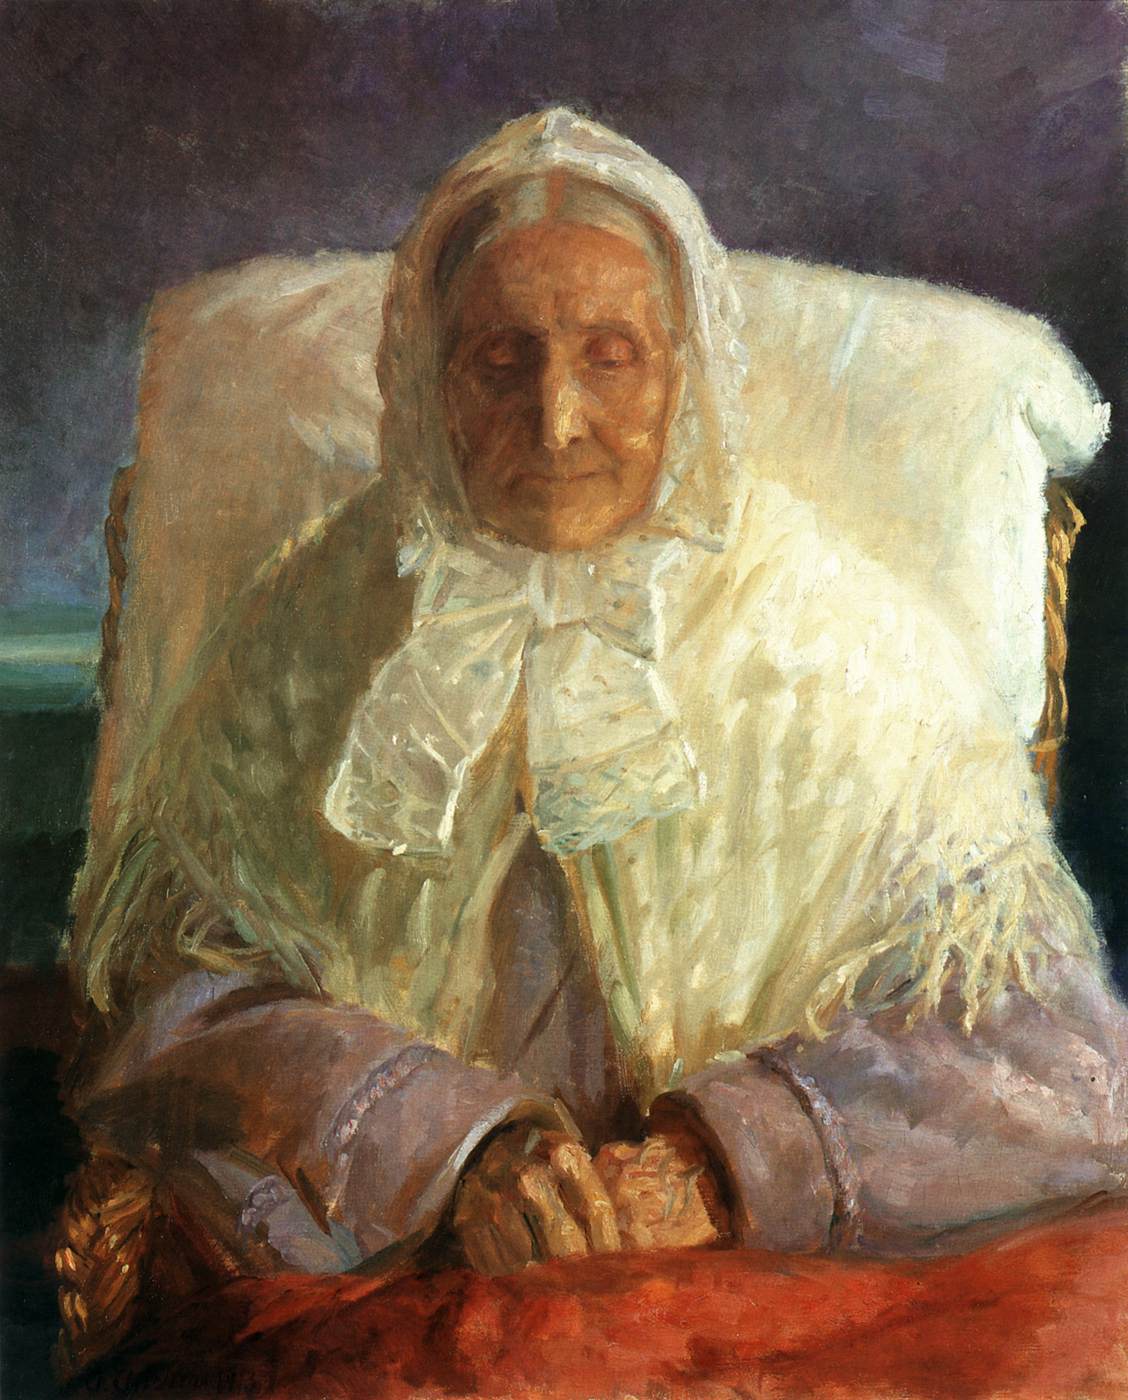 Matka artysty, Ana Hedvig Brøndum